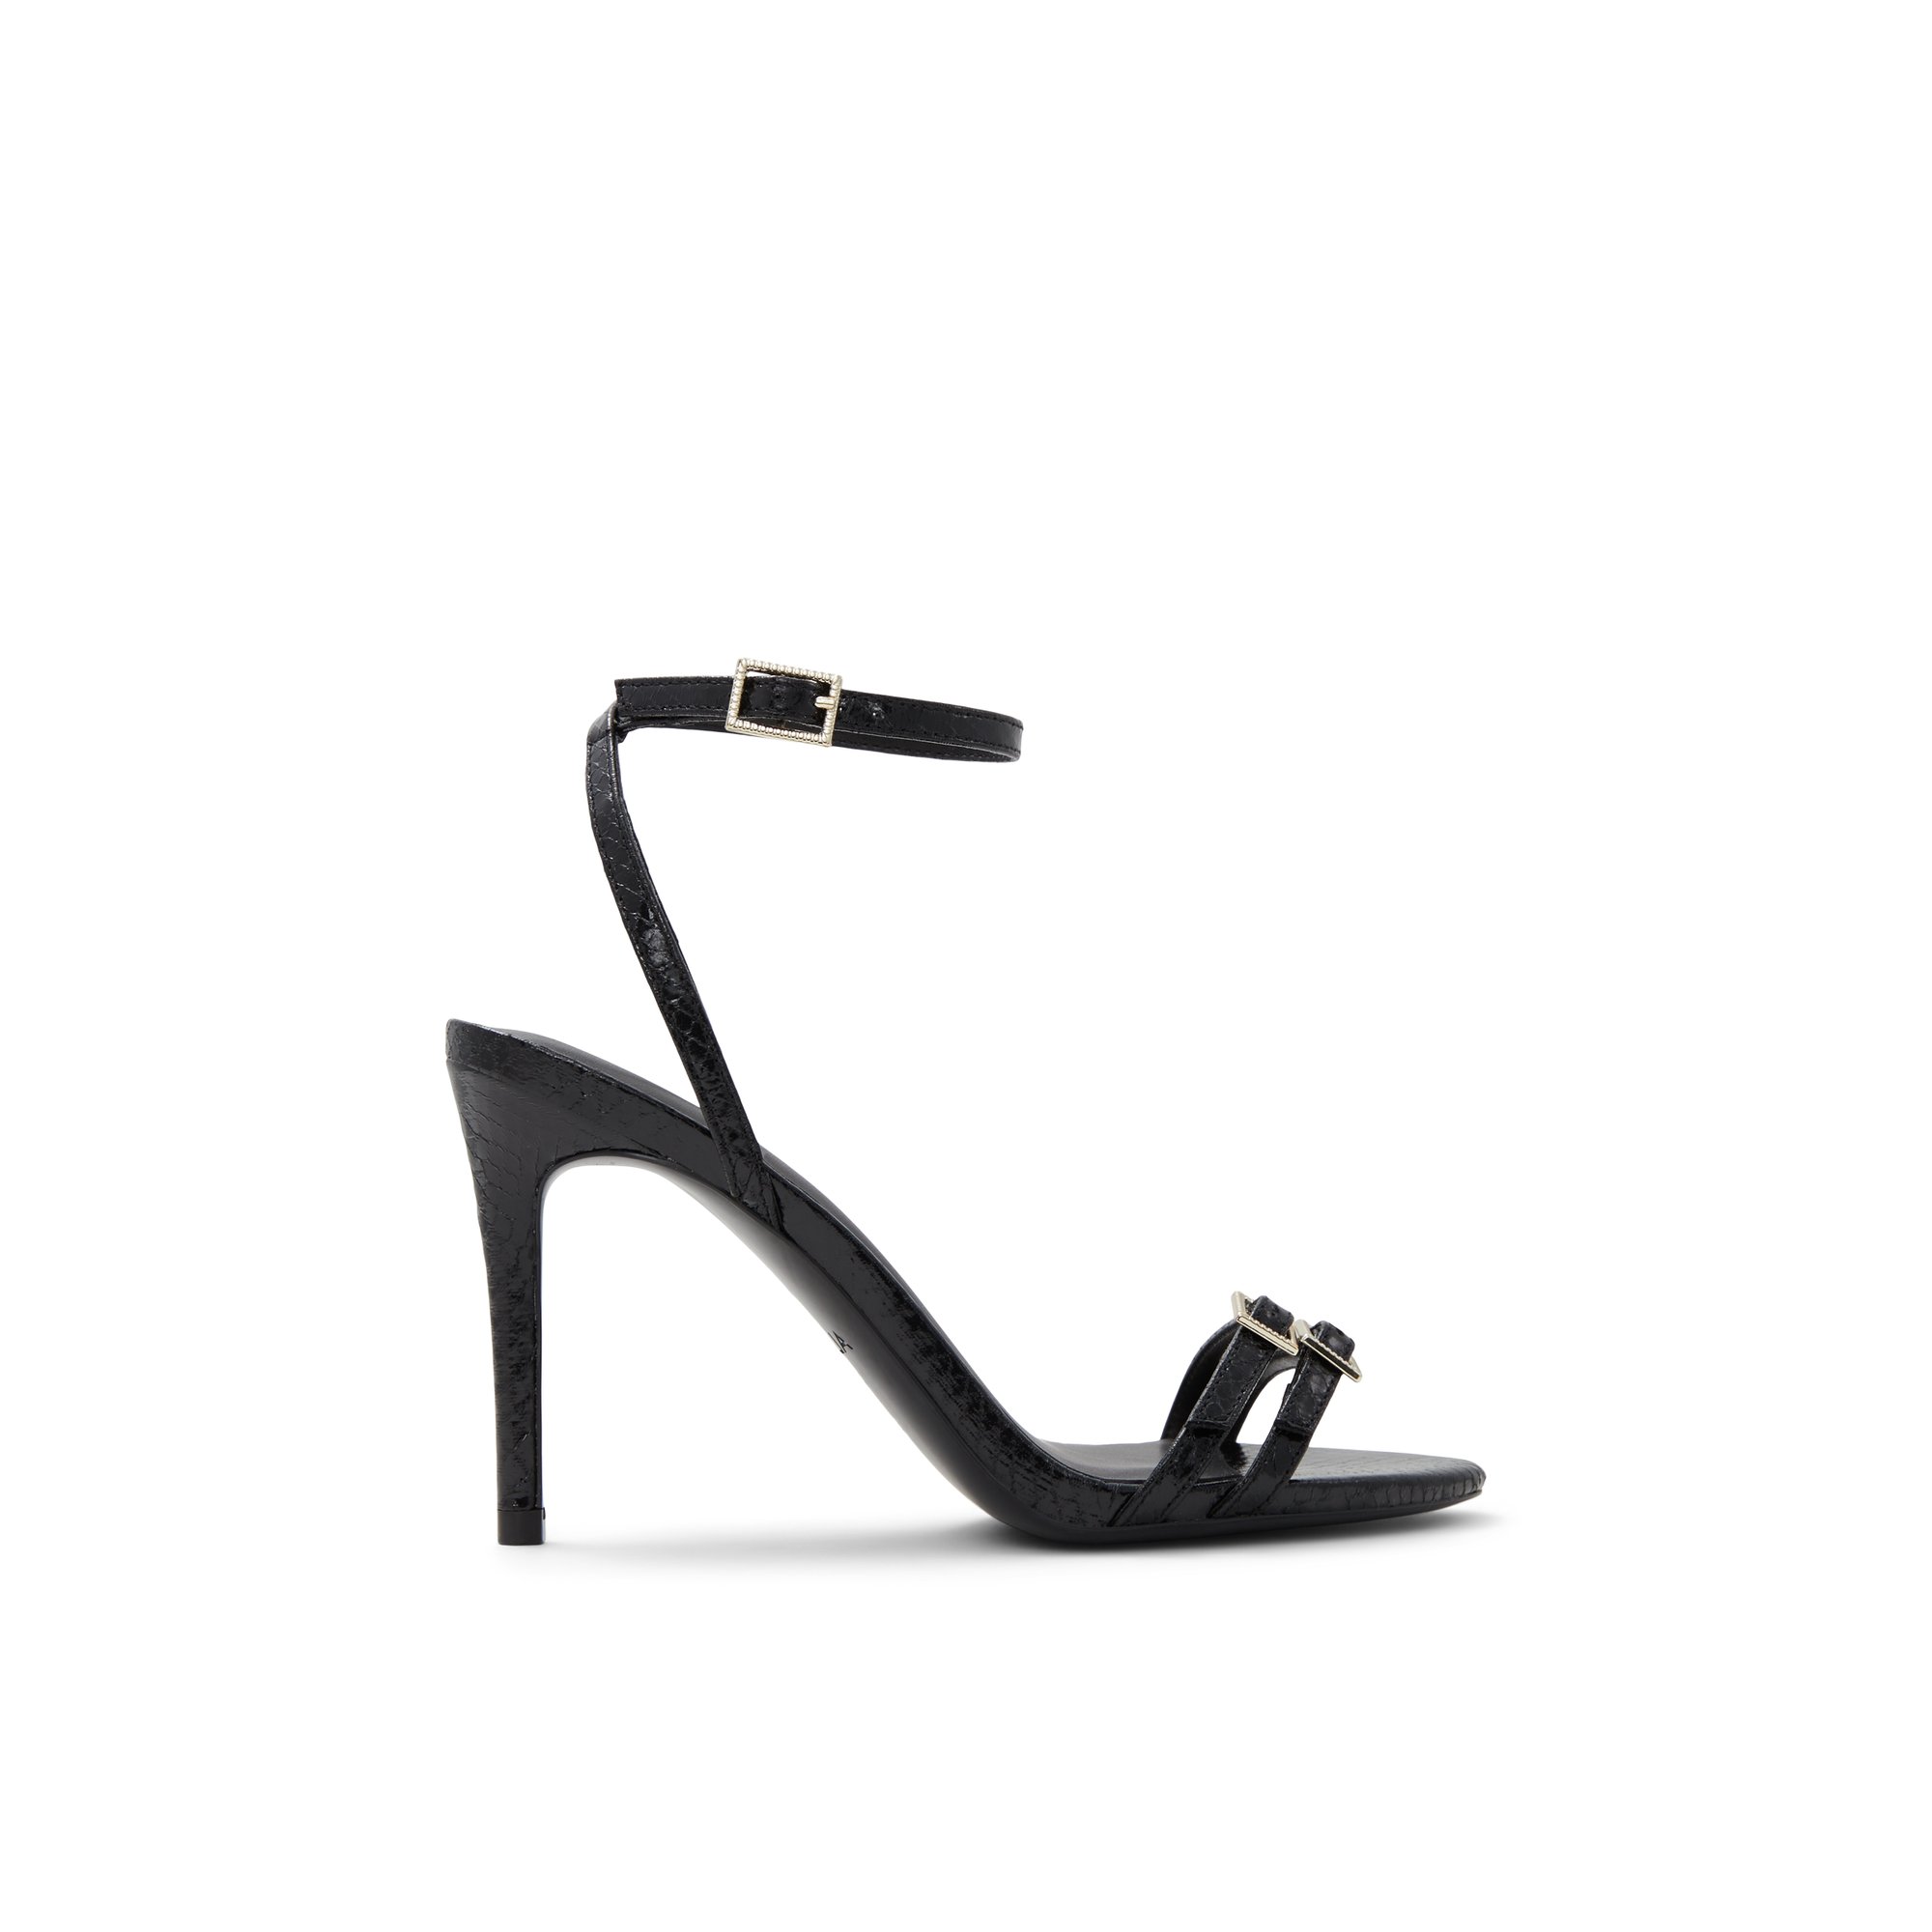 ALDO Graciee - Women's Strappy Sandal Sandals - Black